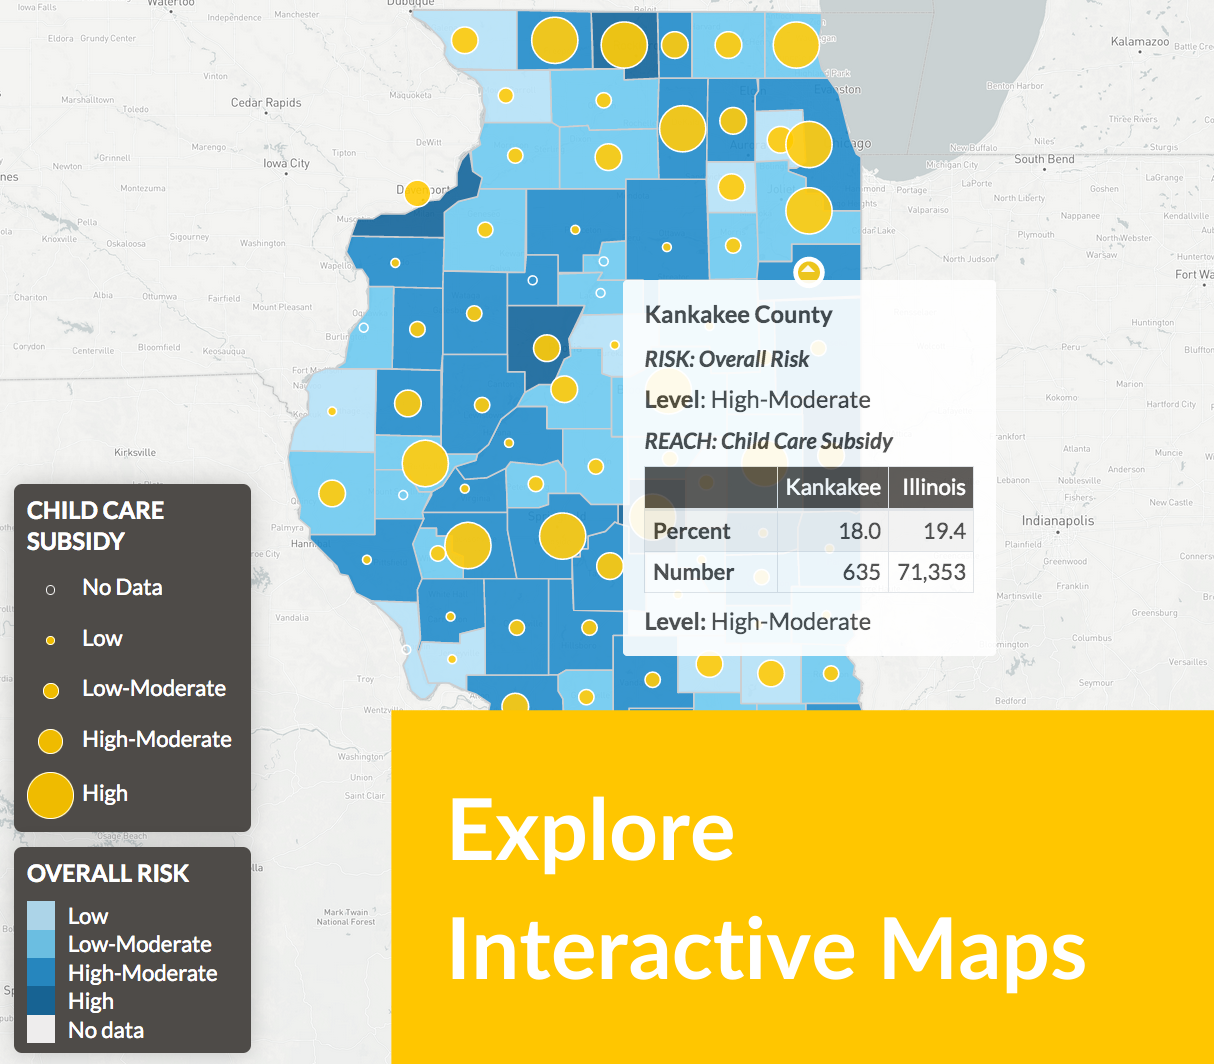 Explore Interactive Maps